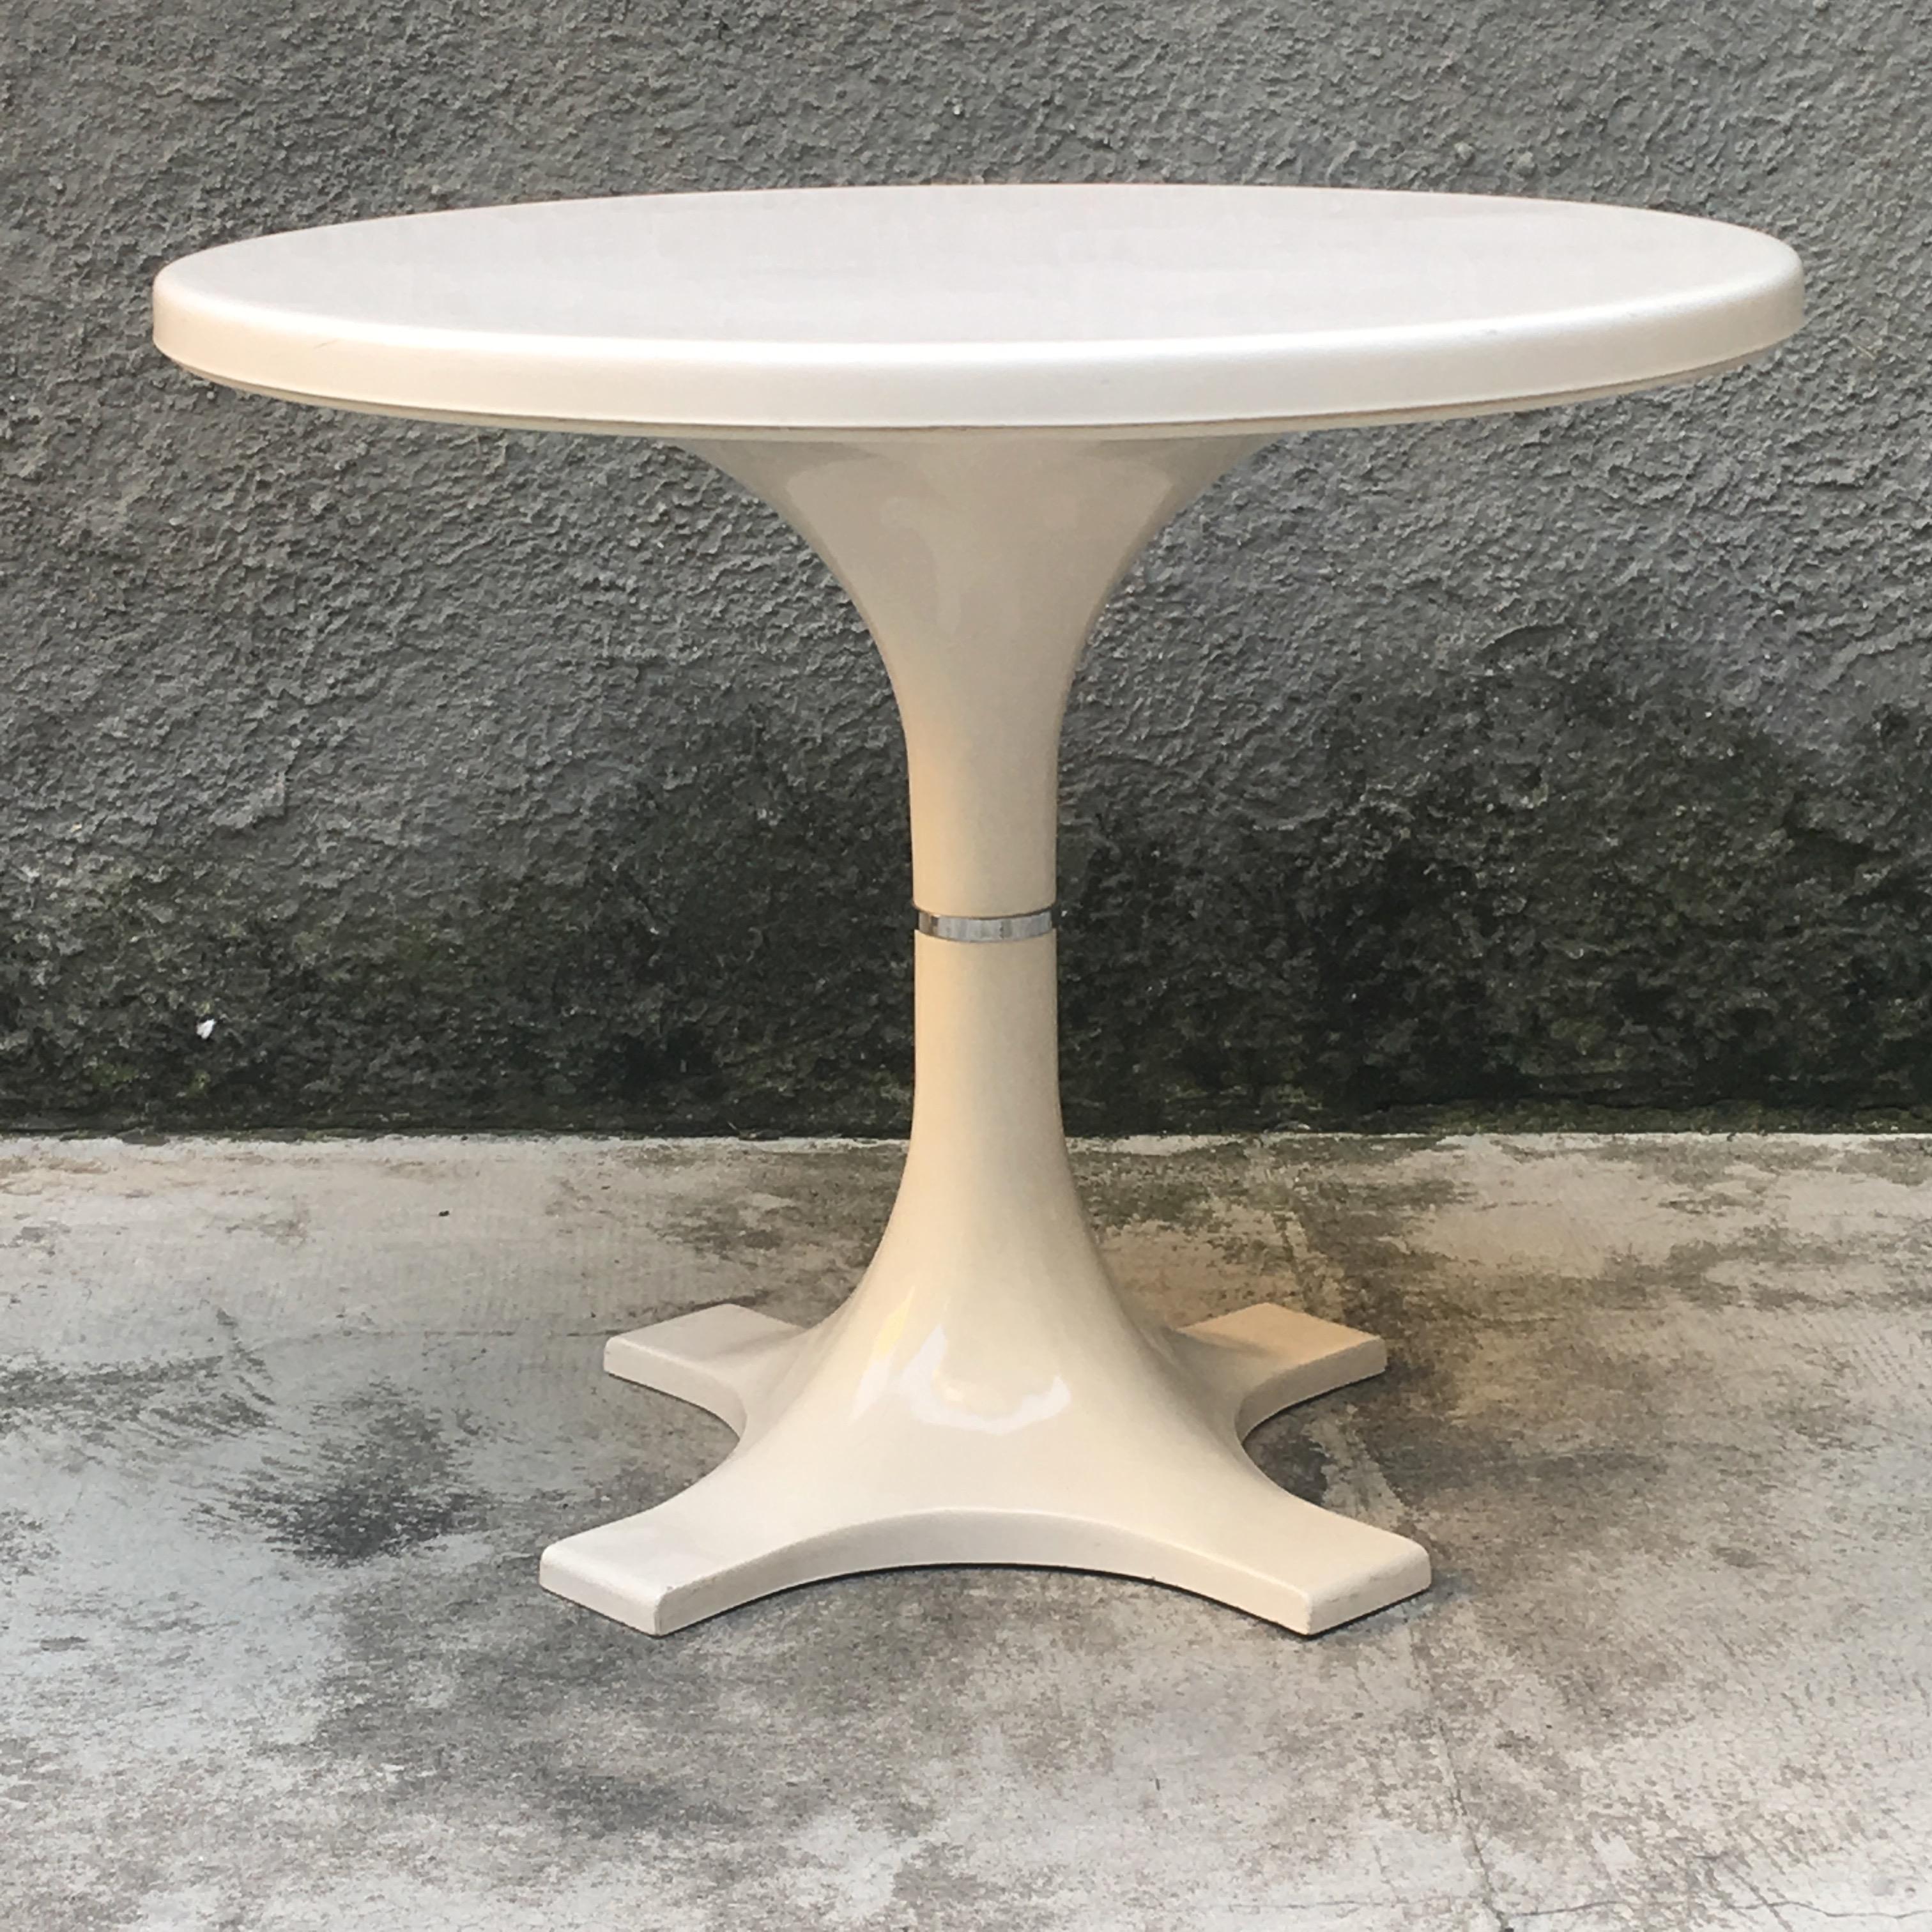 20th Century Dining table - A. Castelli Ferrieri, Ignazio Gardella - Kartell, Italy 1965 For Sale